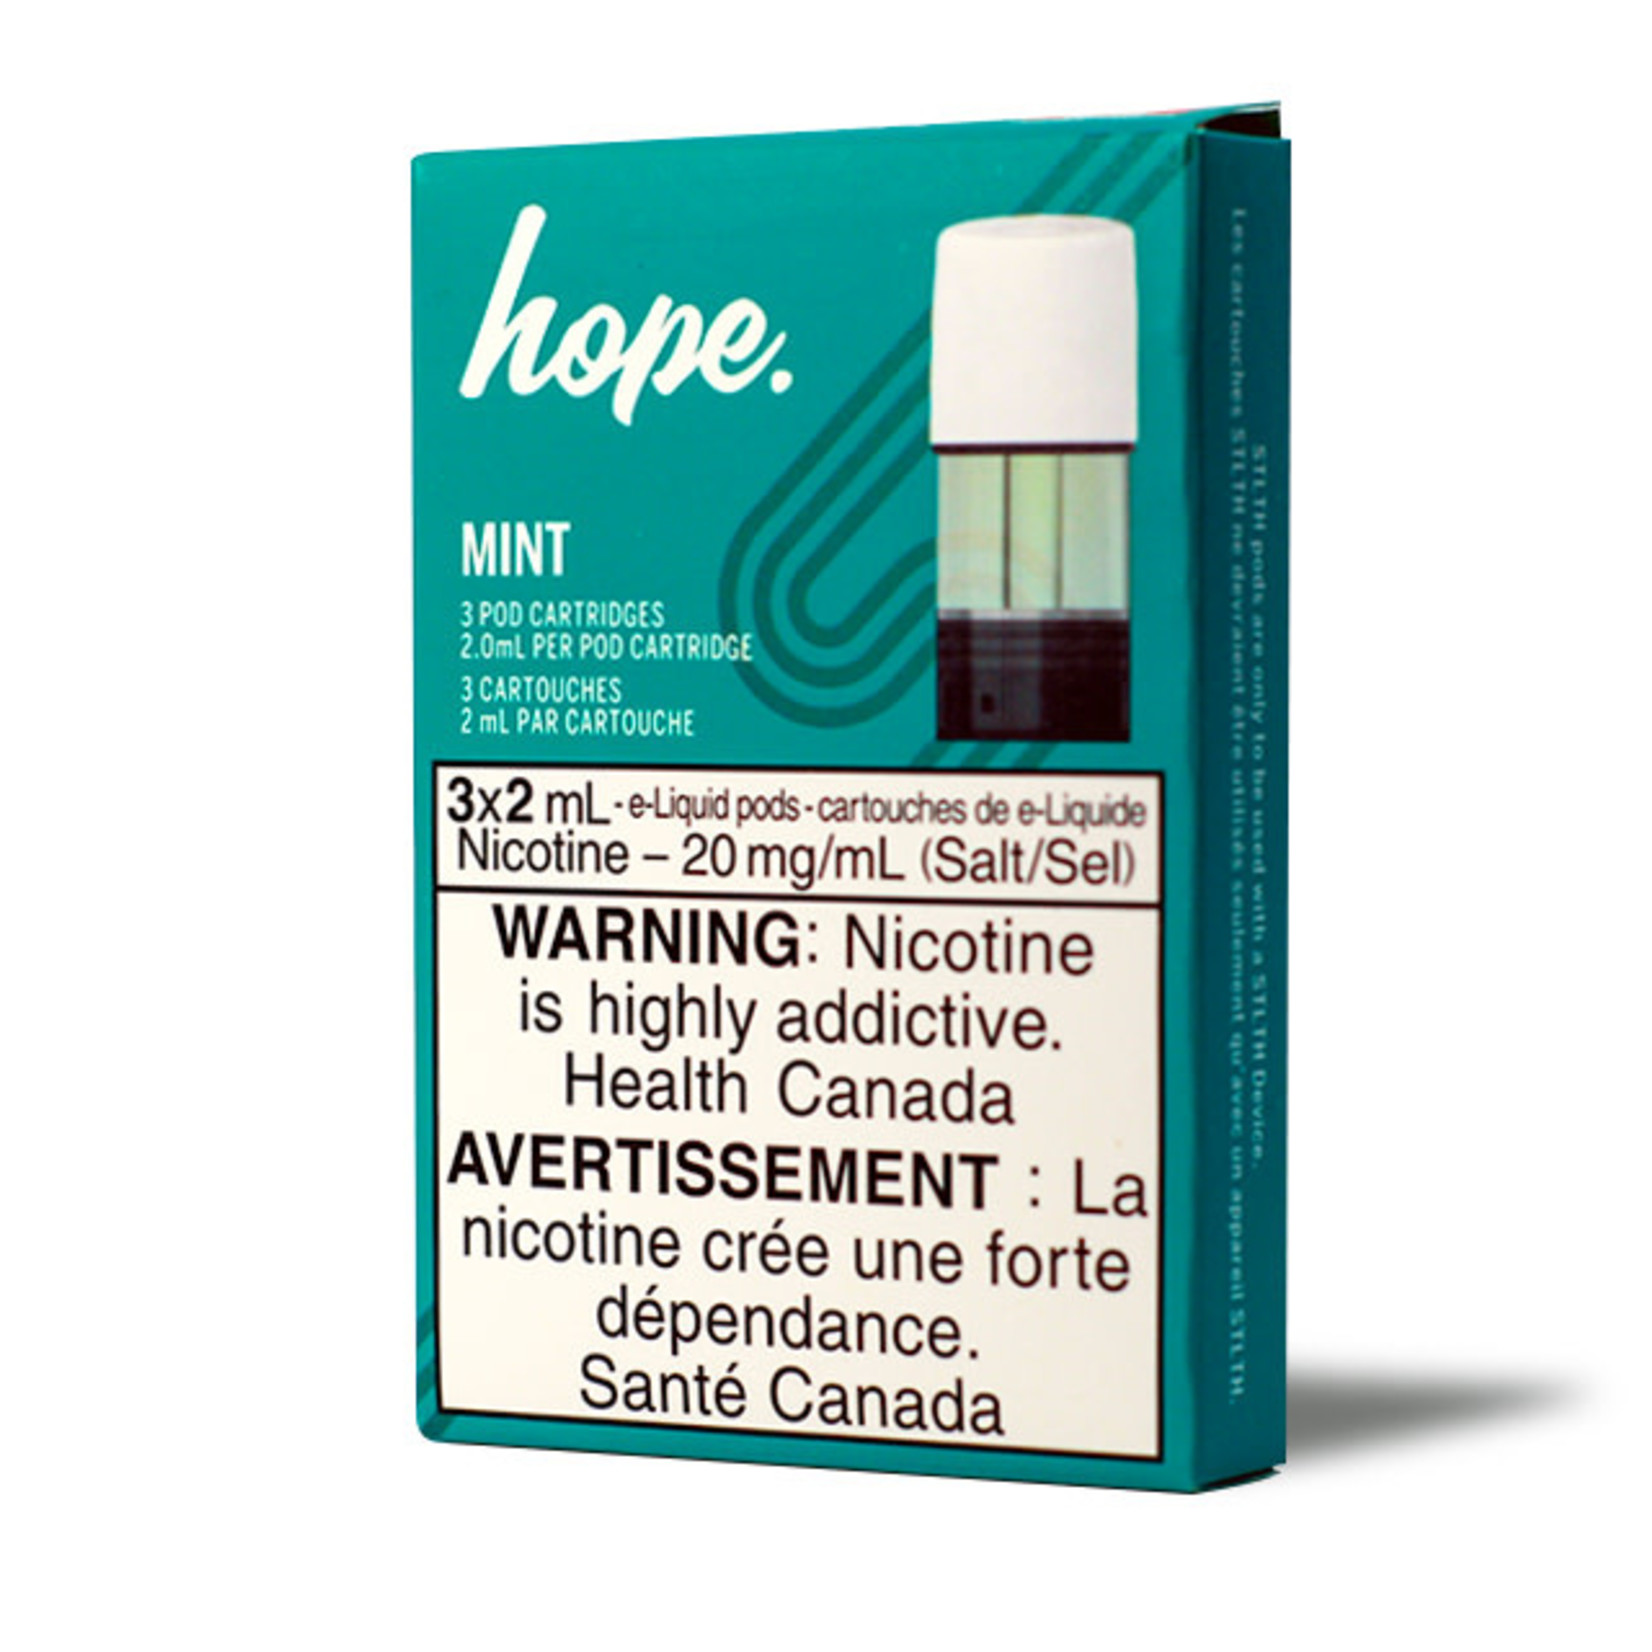 STLTH Pod Pack - Hope Mint